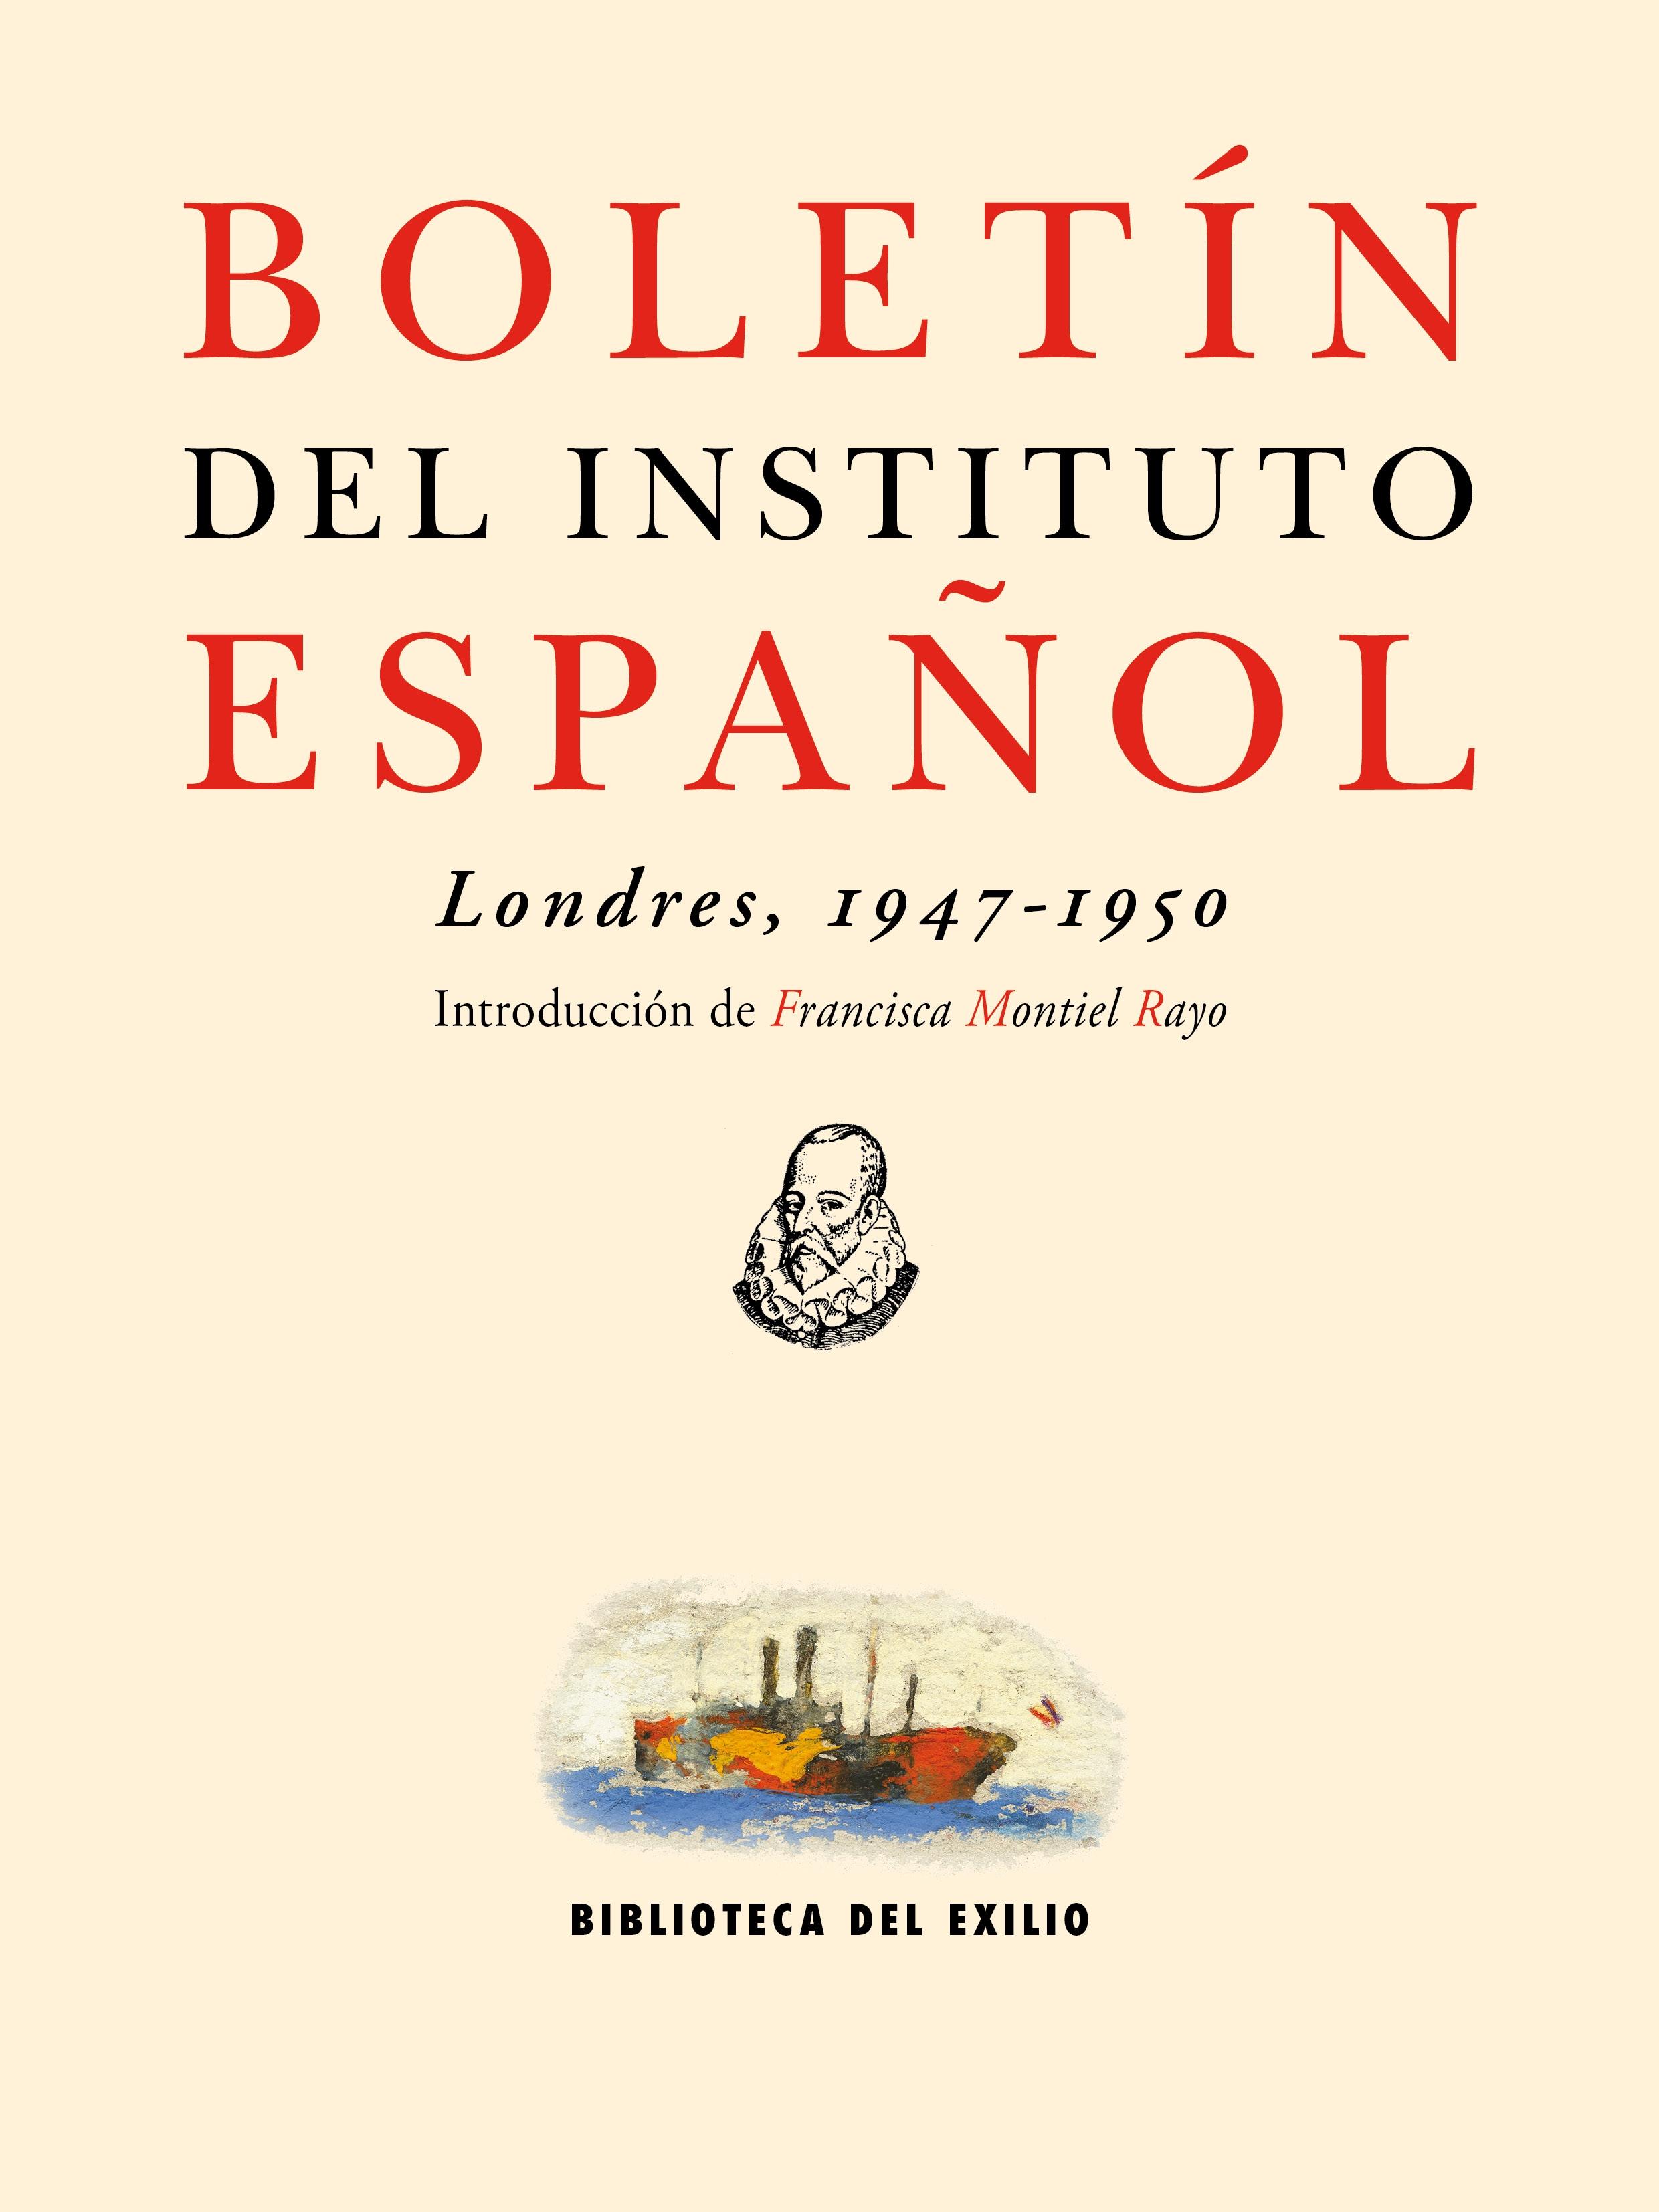 Boletín del Instituto Español "(Londres, 1947-1950)"